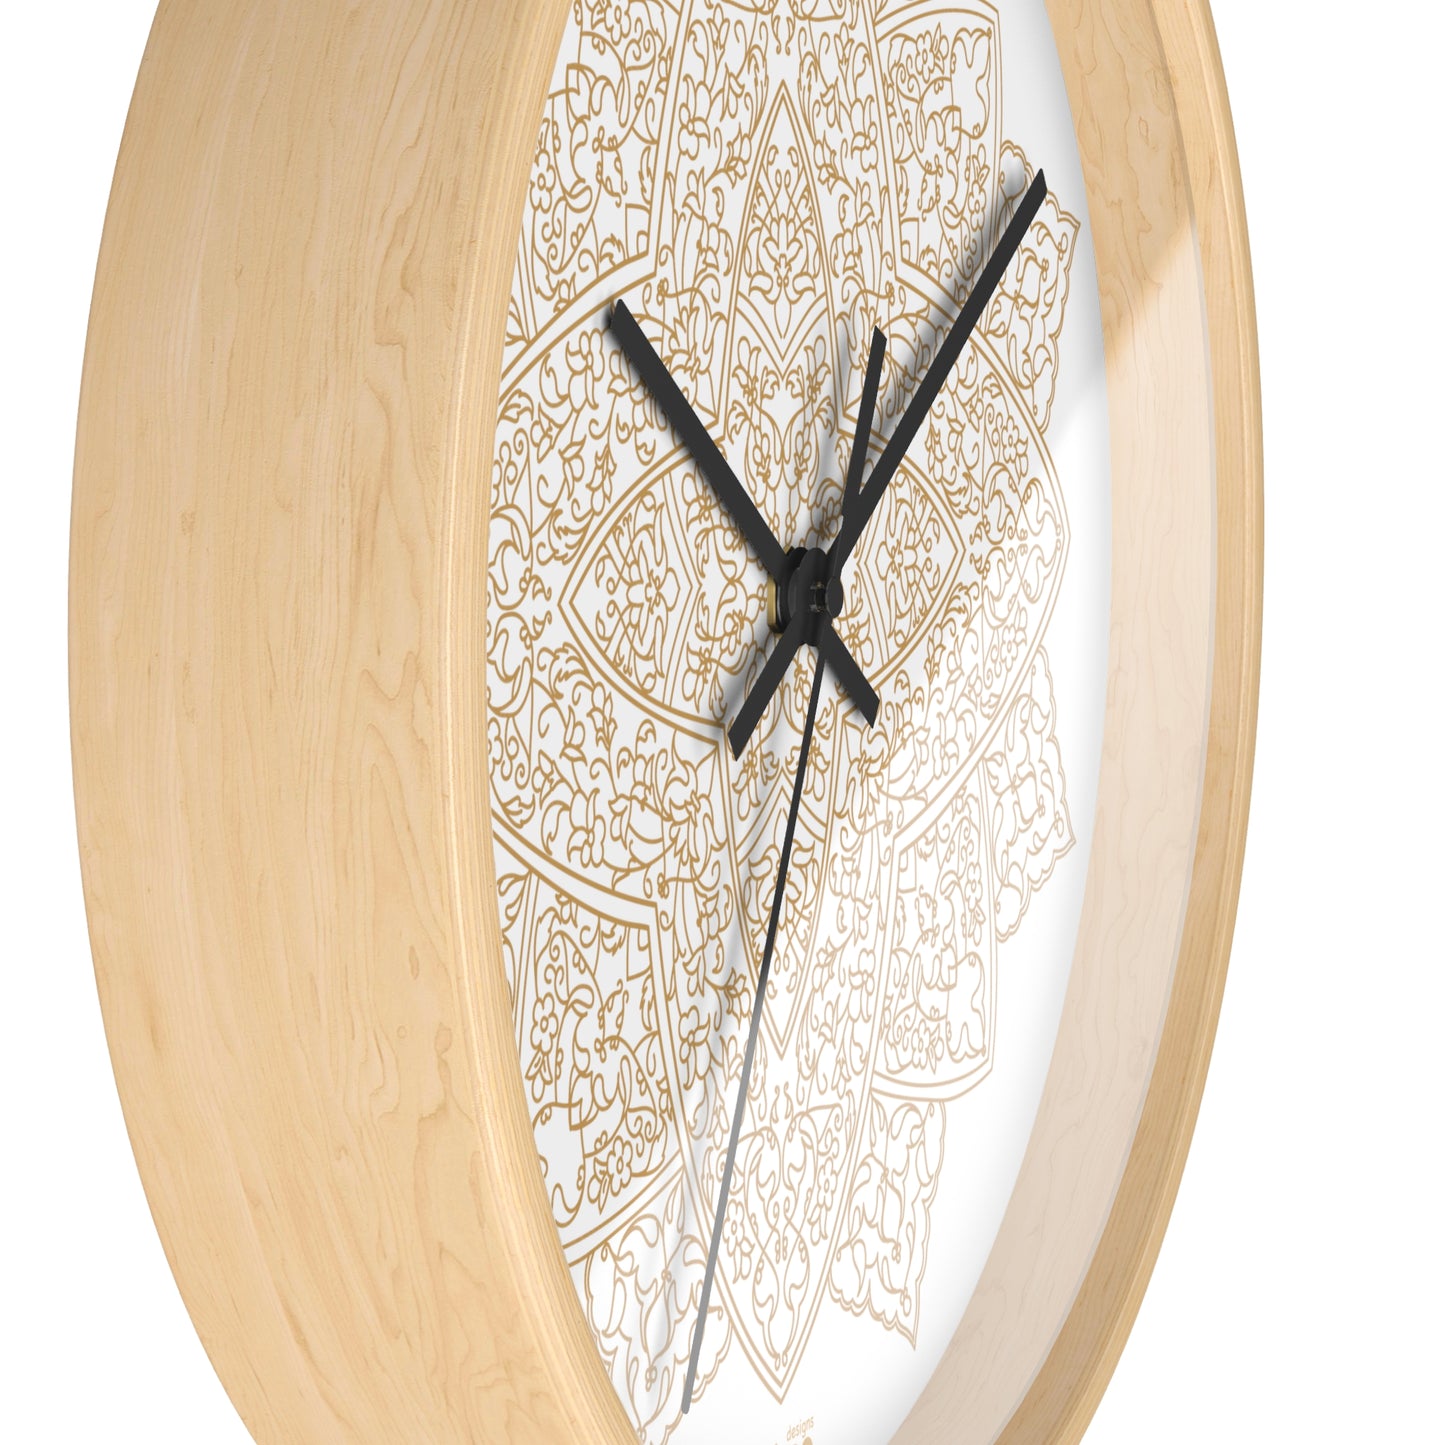 Wall Clock with Shamse design: ساعت دیواری با طرح شمسه